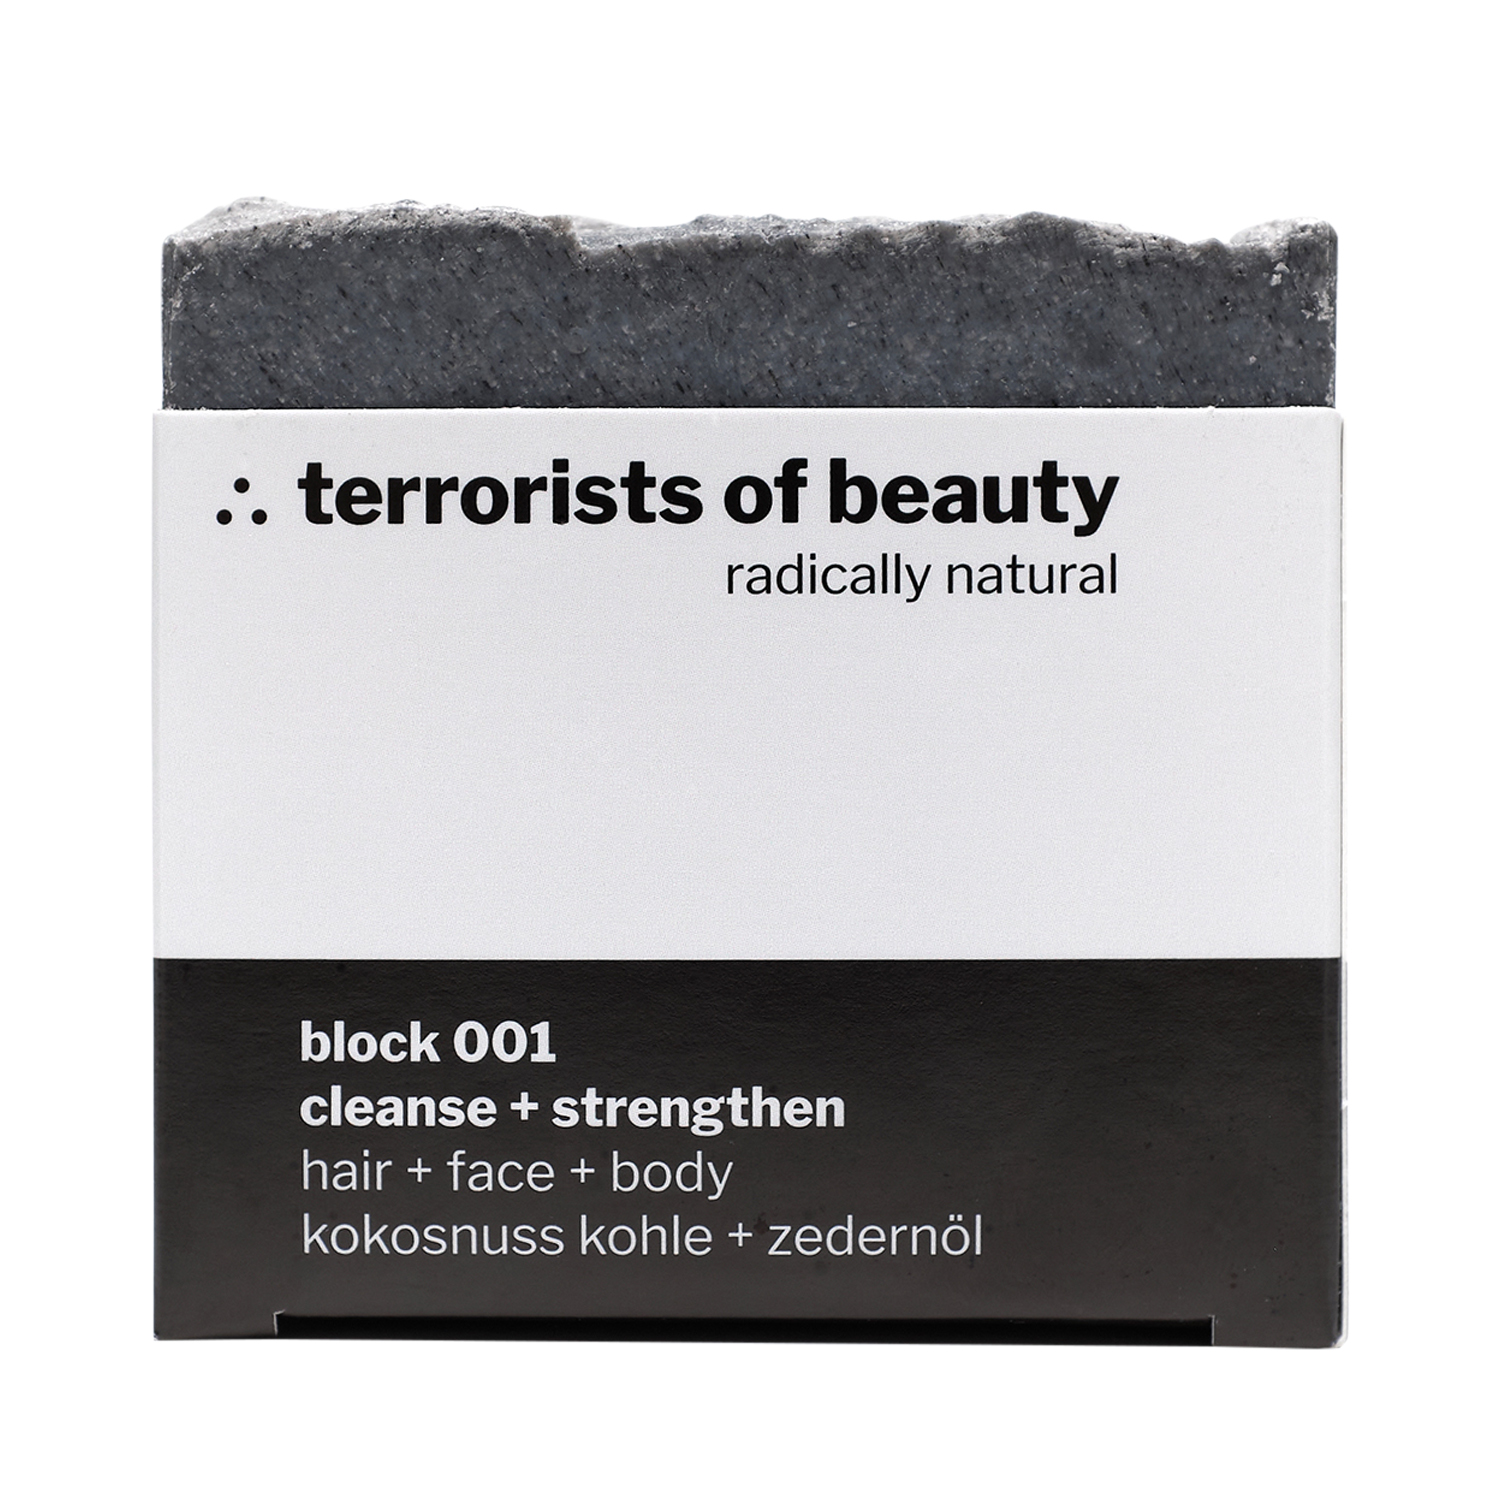 terrorists of beauty - block 001 - cleanse + strengthen - Naturseife für Haare, Gesicht und Körper